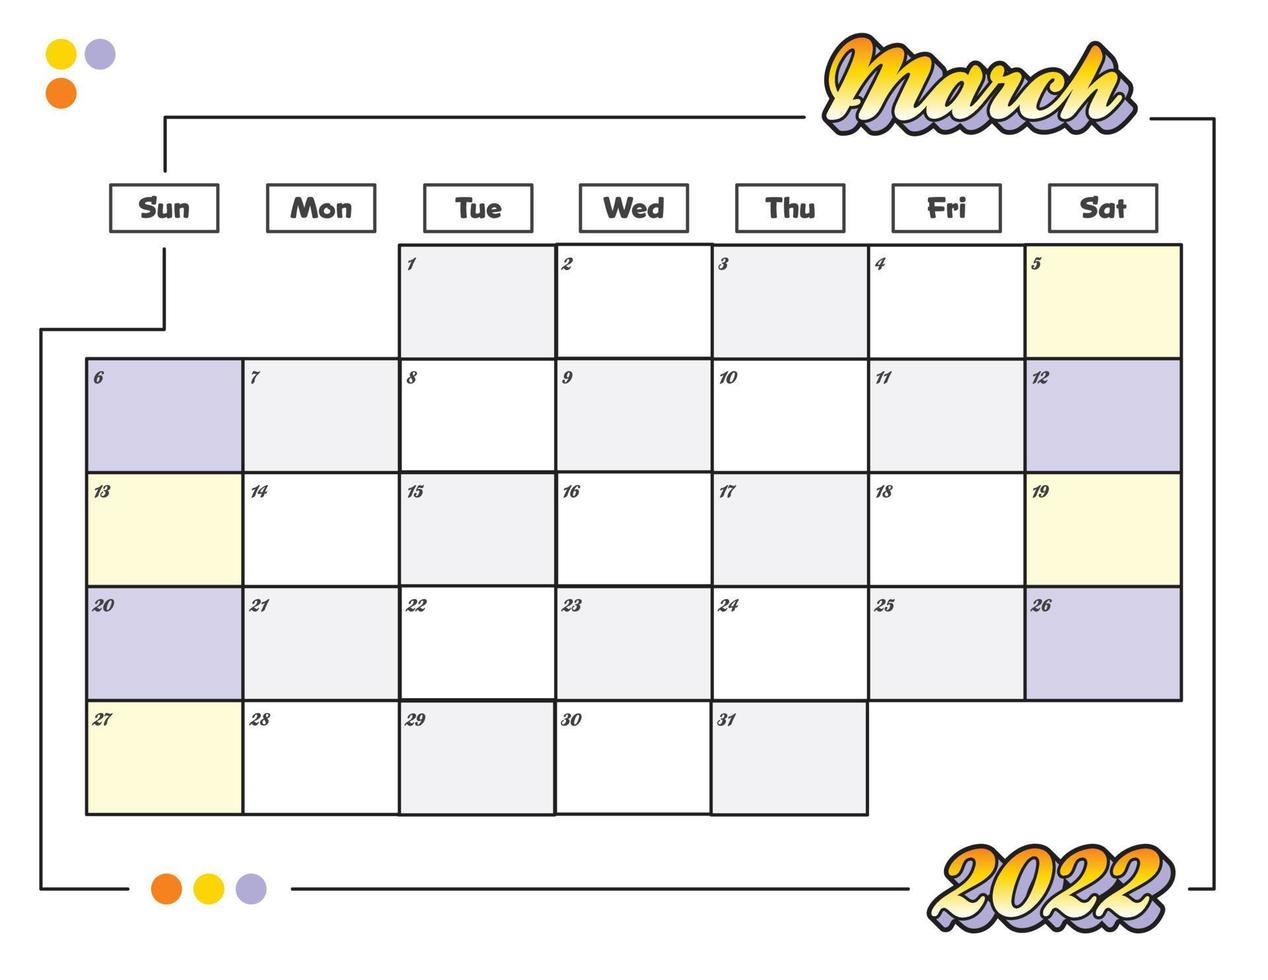 marzo colorido lindo calendario mensual 2022 imprimible vector